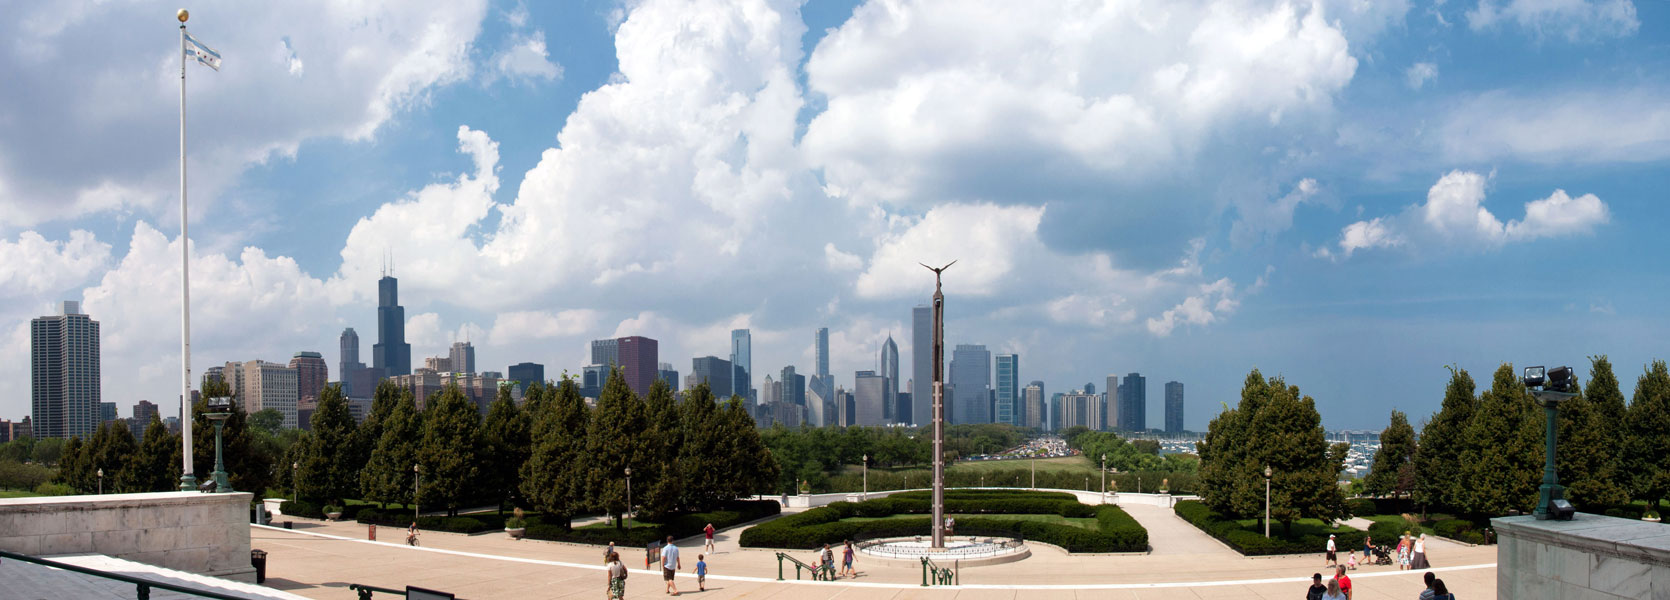 P8208236ps.jpg - The Chicago skyline